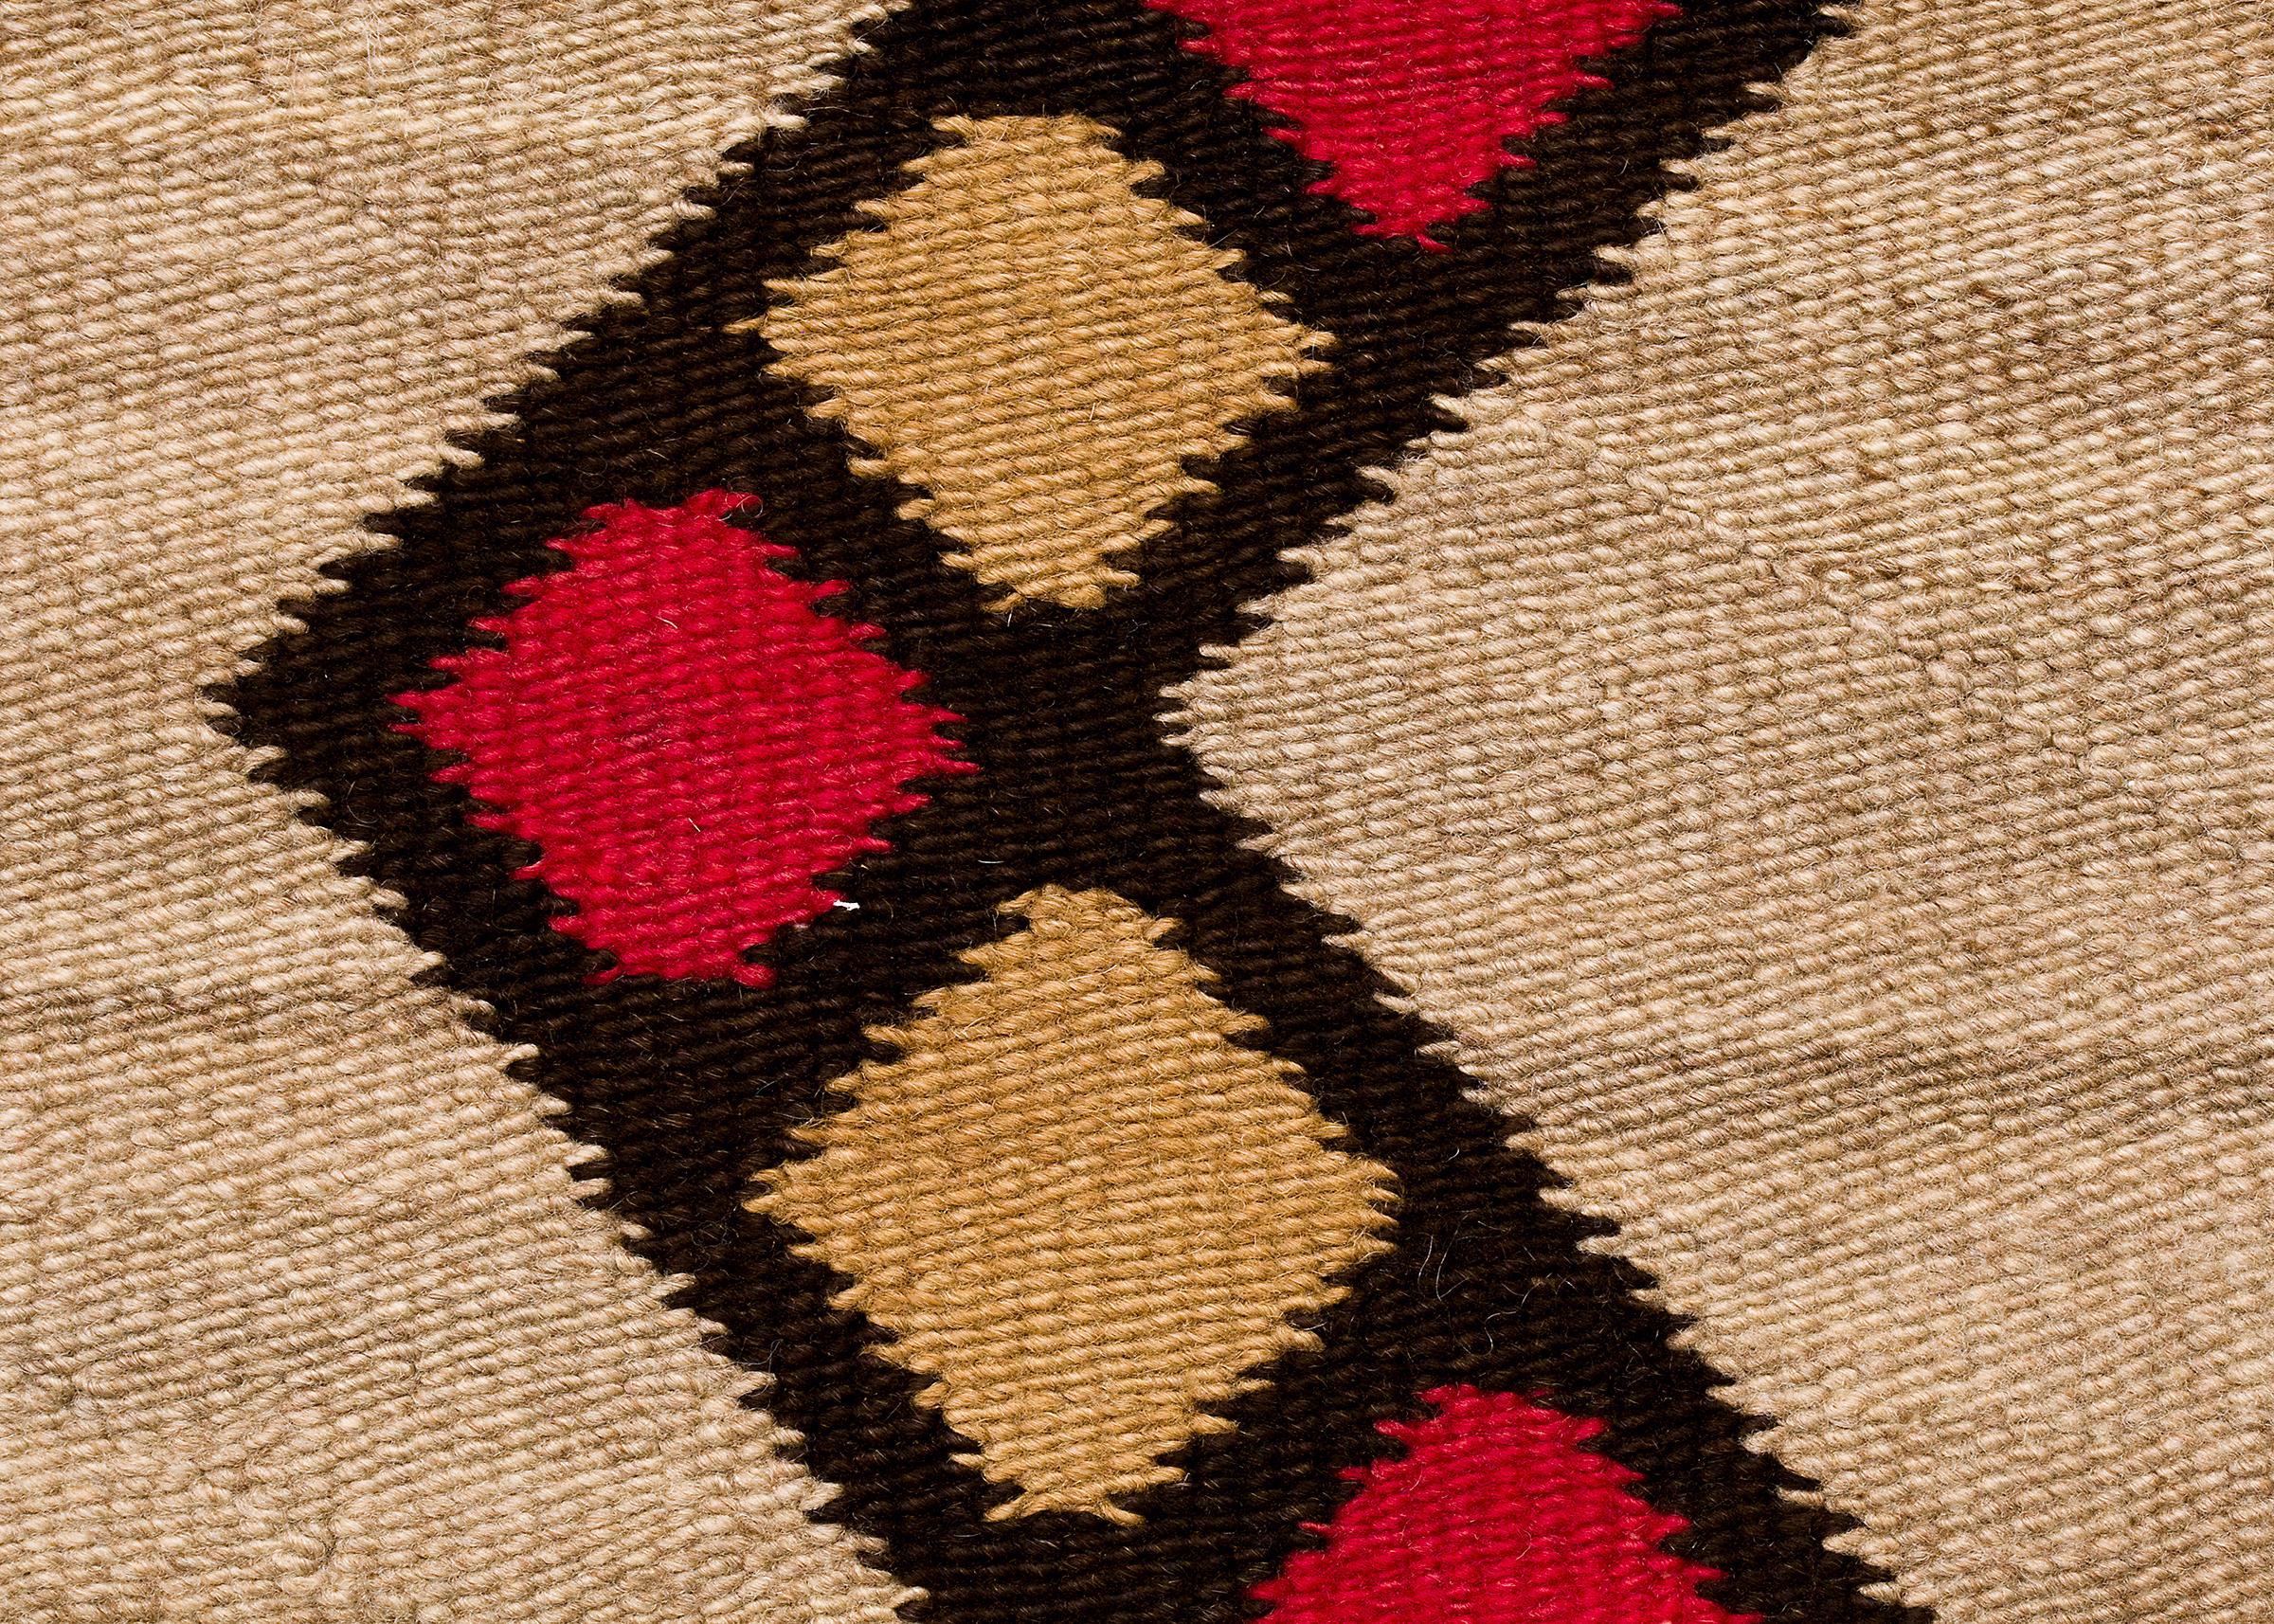 American Vintage Navajo Area Rug, Trading Post Era, circa 1930s, Brown, White, Red, Black